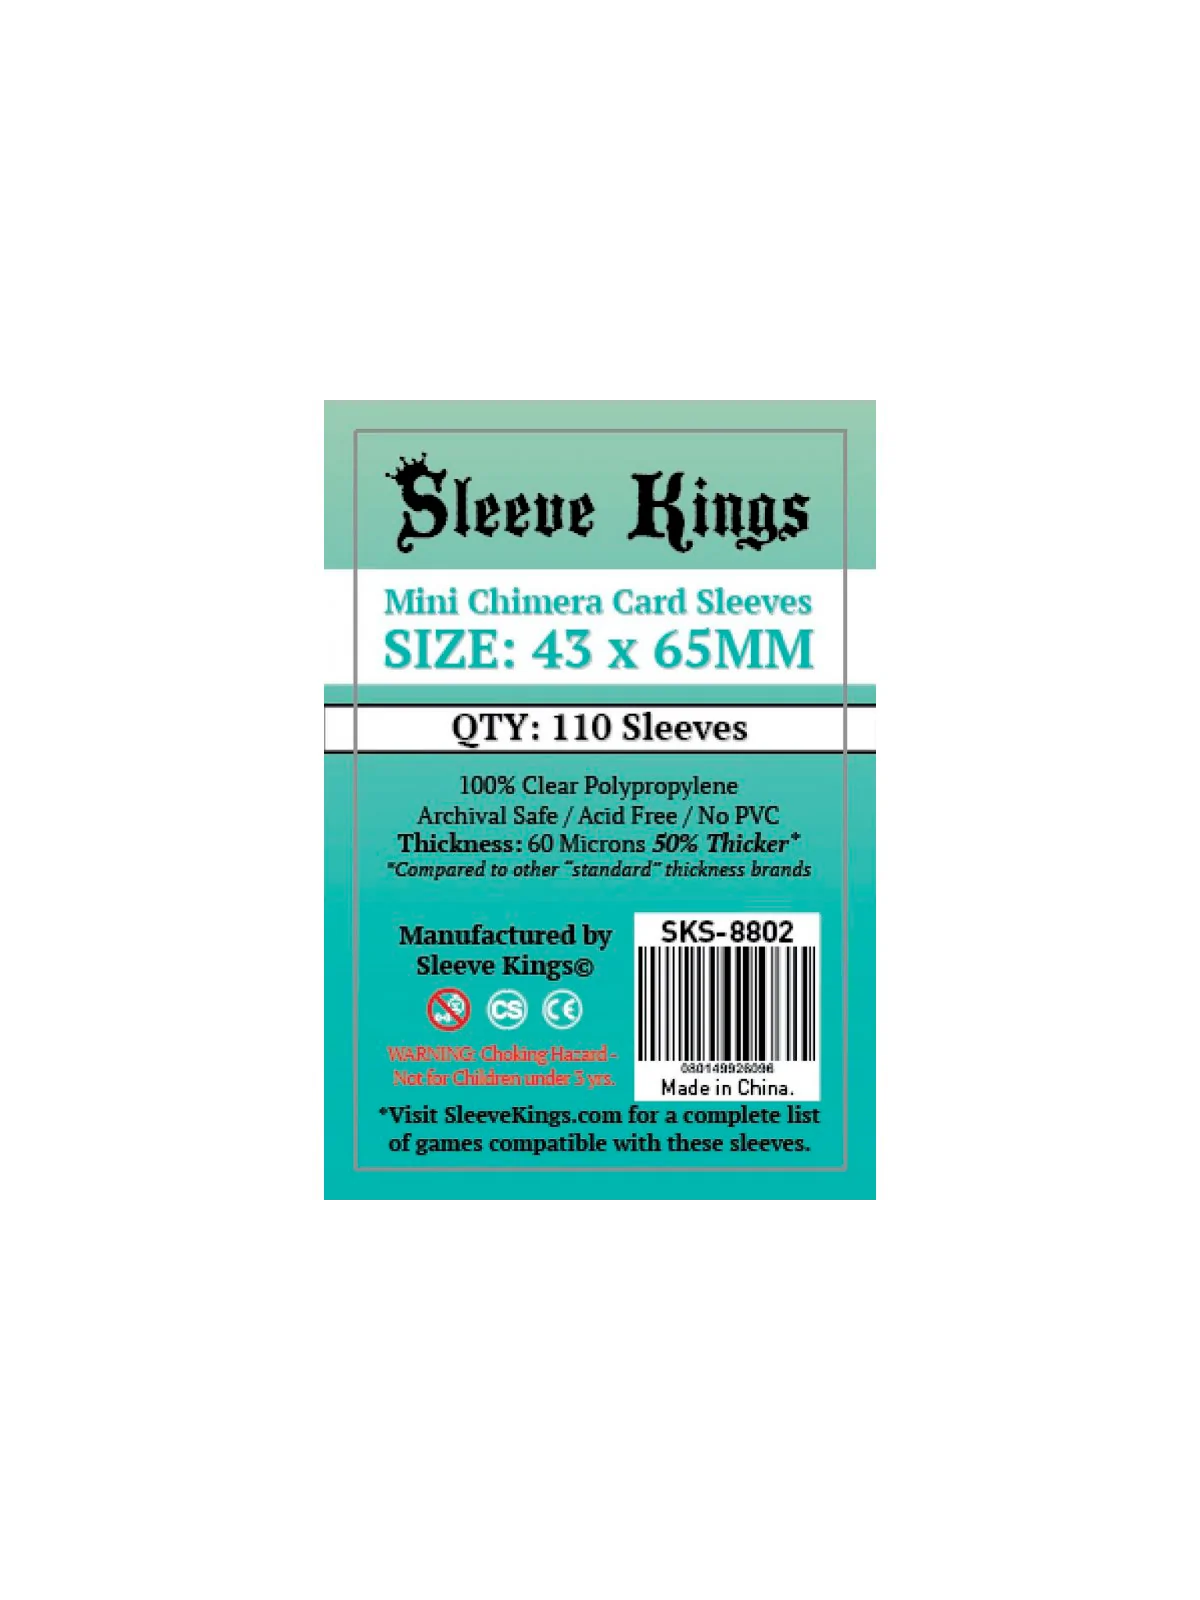 Comprar [8802] Sleeve Kings Mini Chimera Card Sleeves (43x65mm) barato